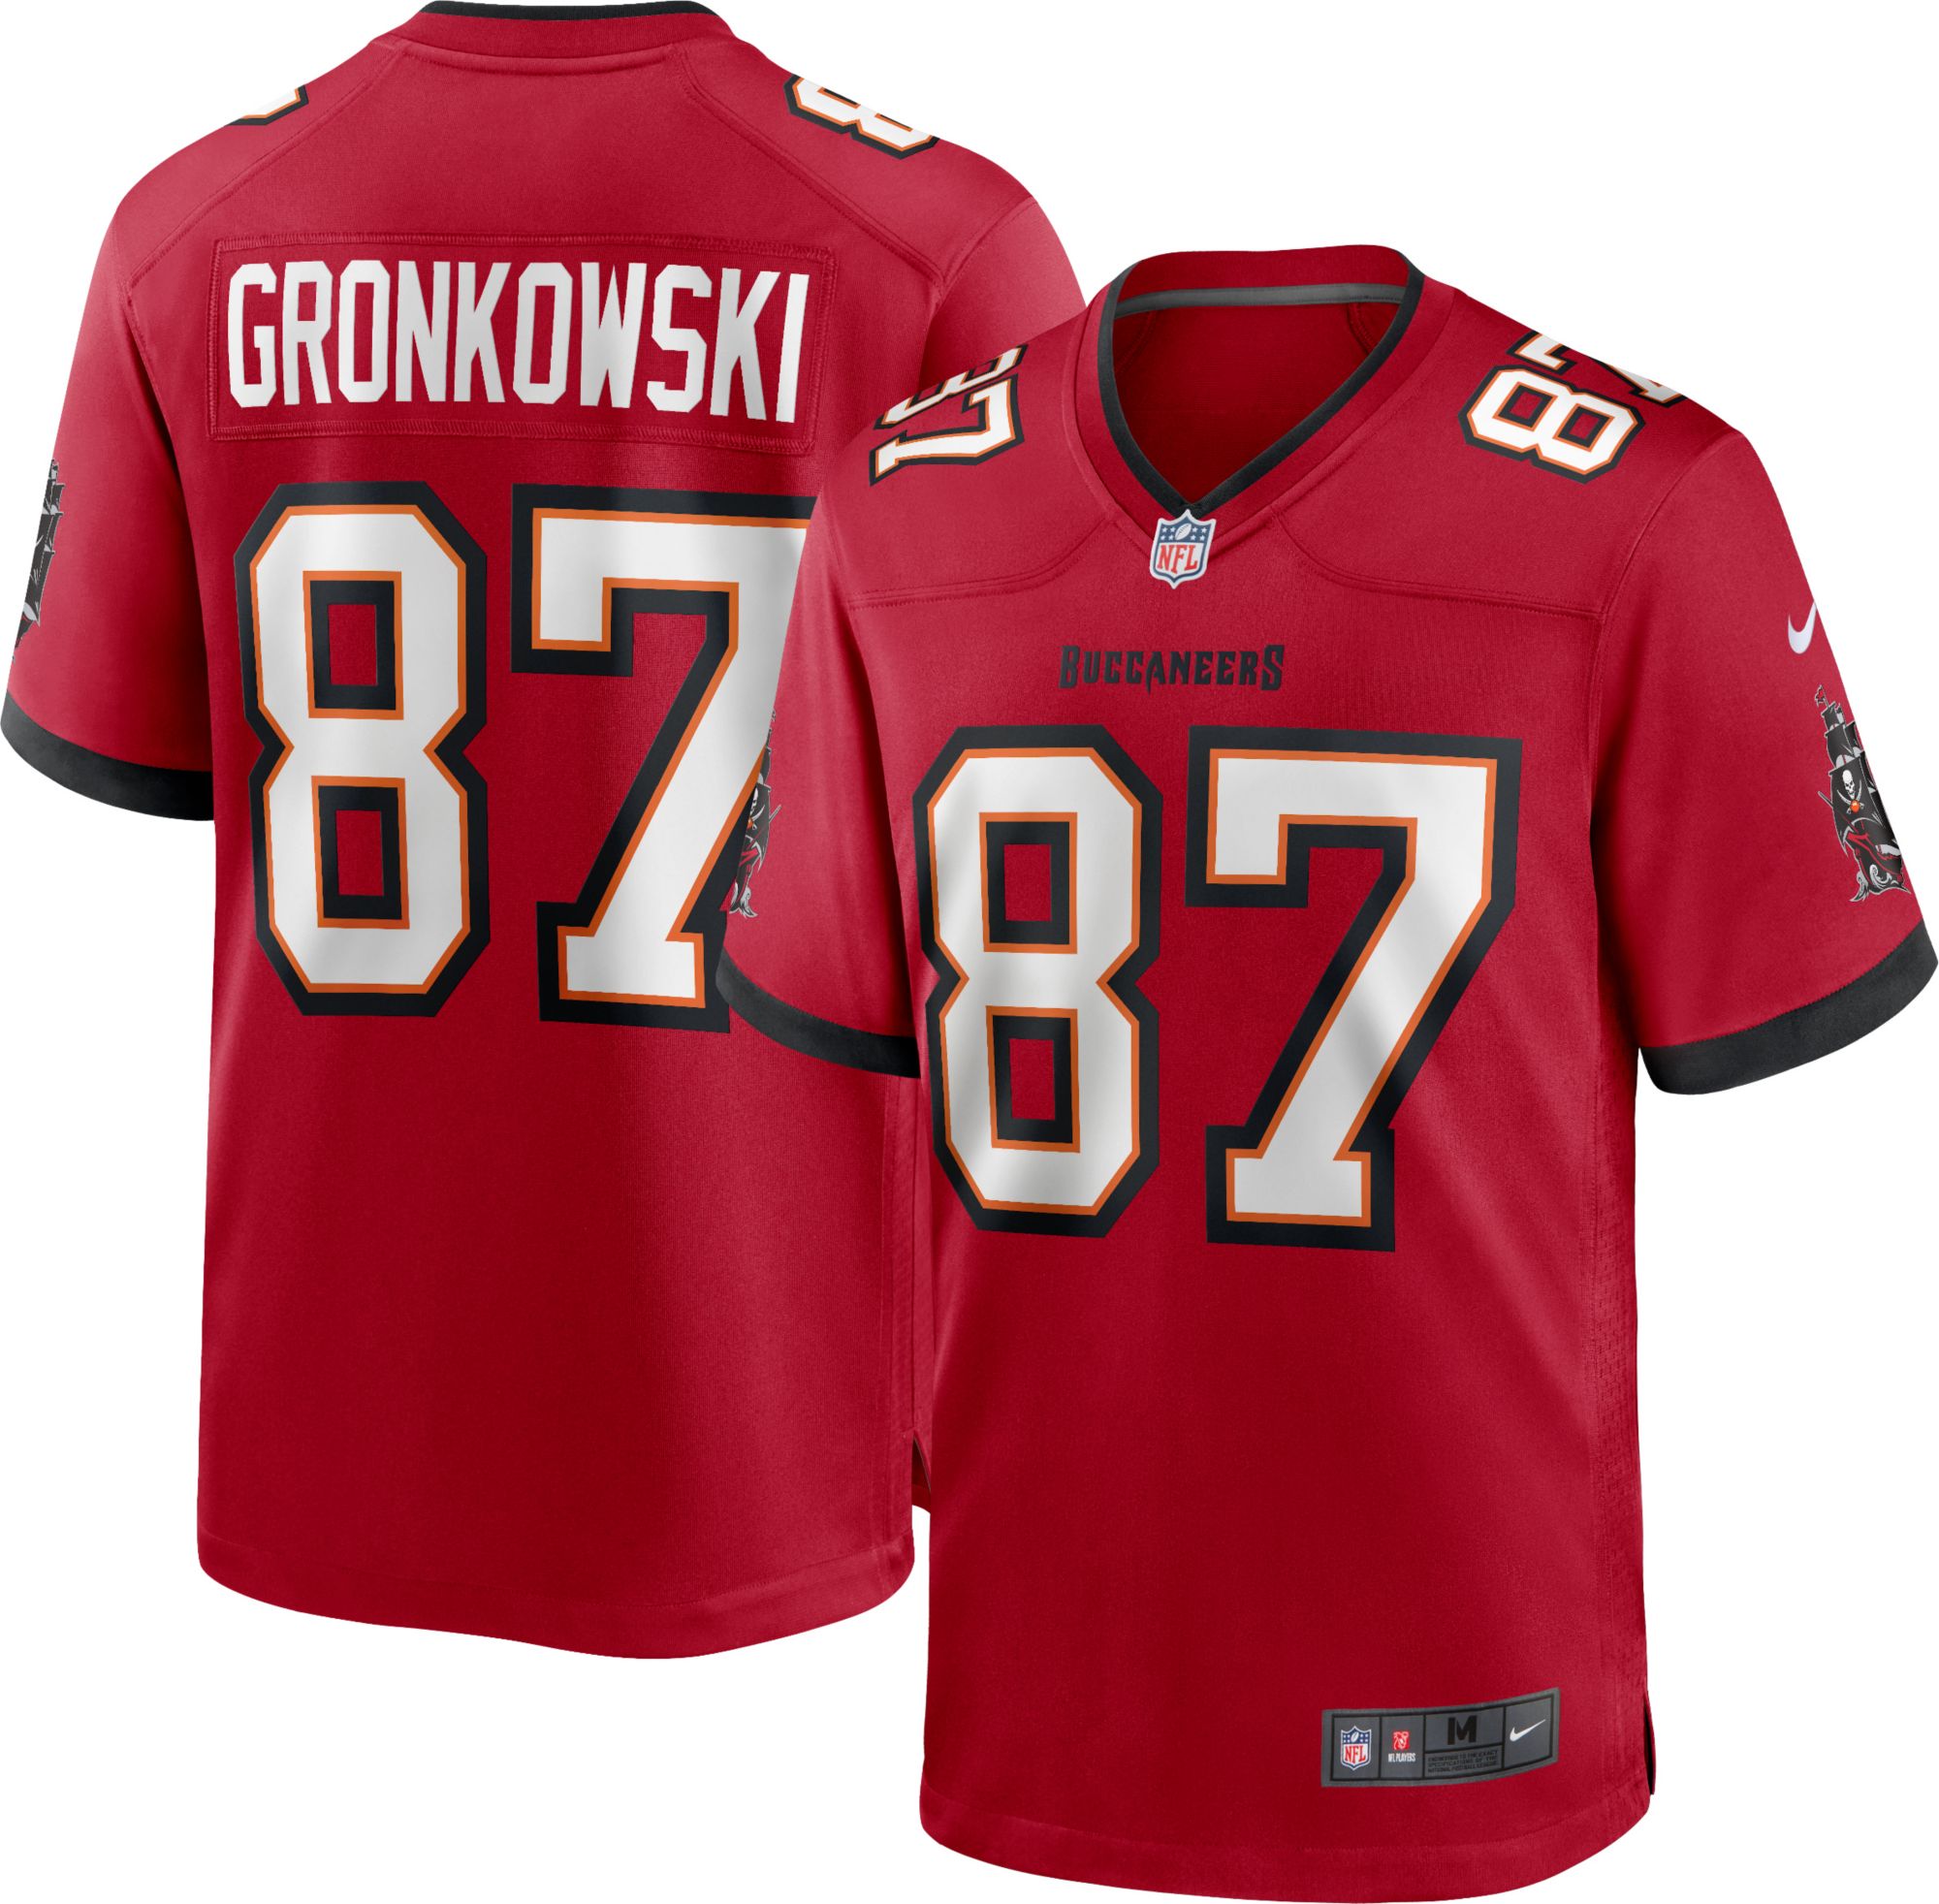 gronkowski jersey cheap